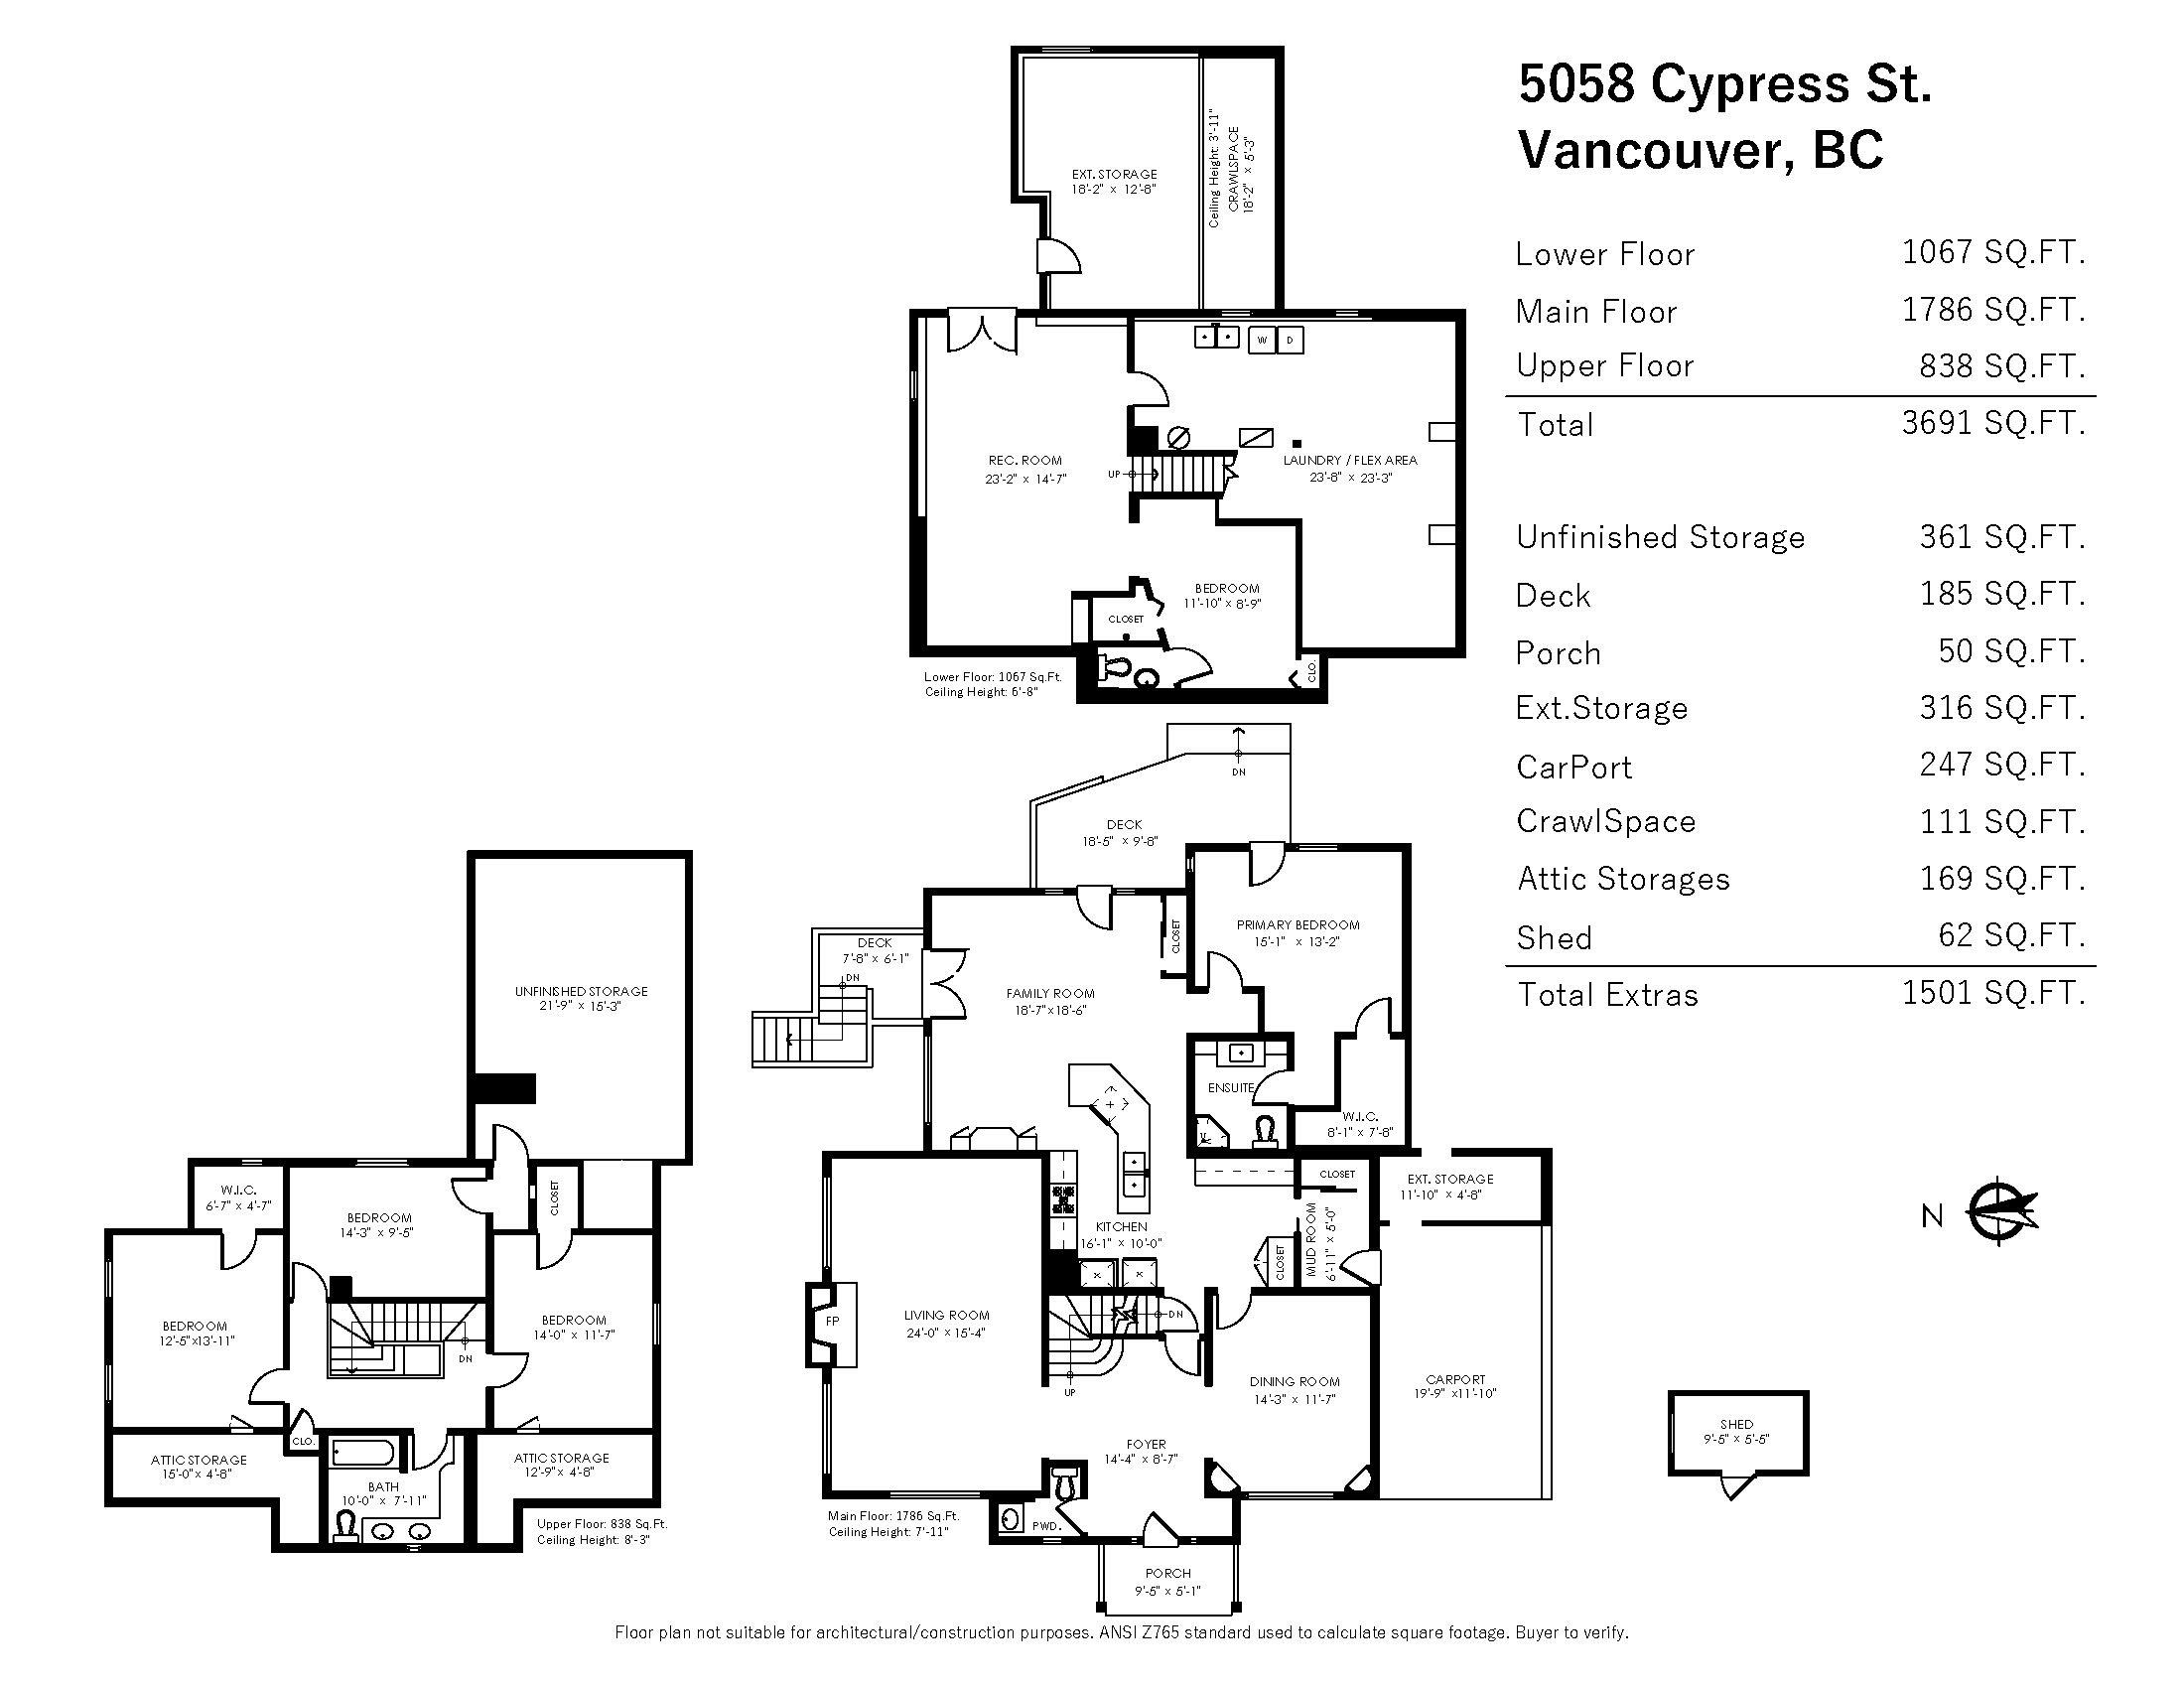 Listing image of 5058 CYPRESS STREET